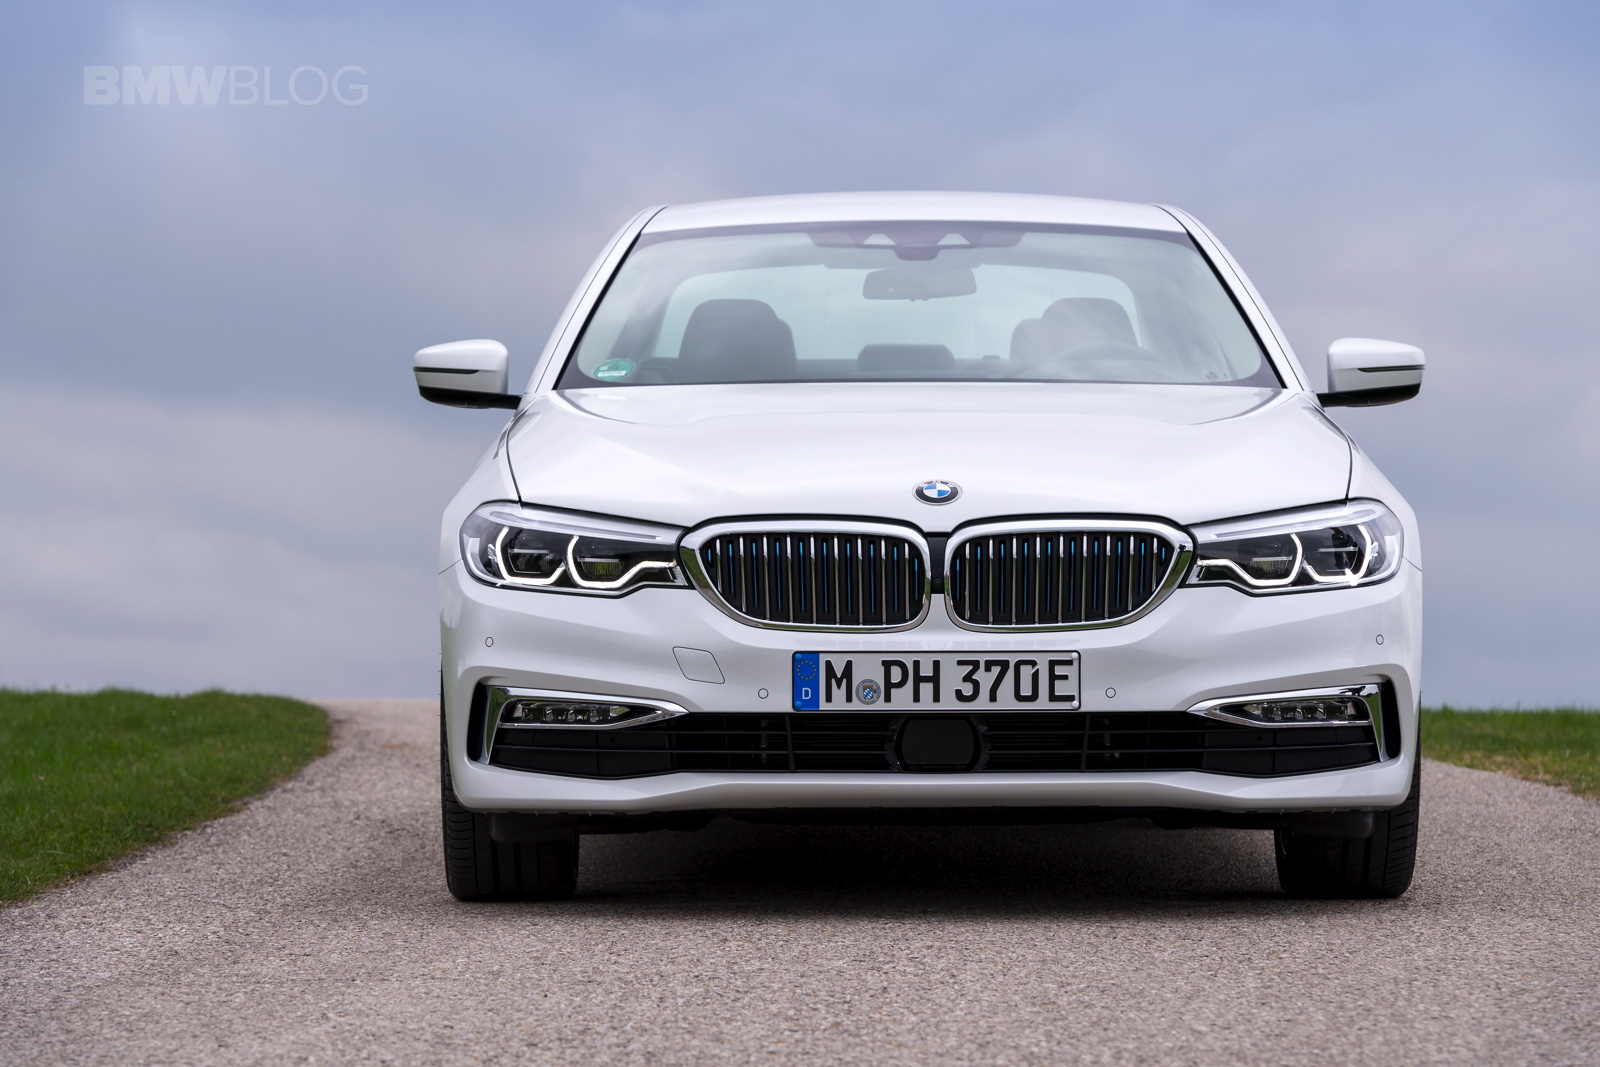 FIRST DRIVE: 2018 BMW 530e plug-in hybrid